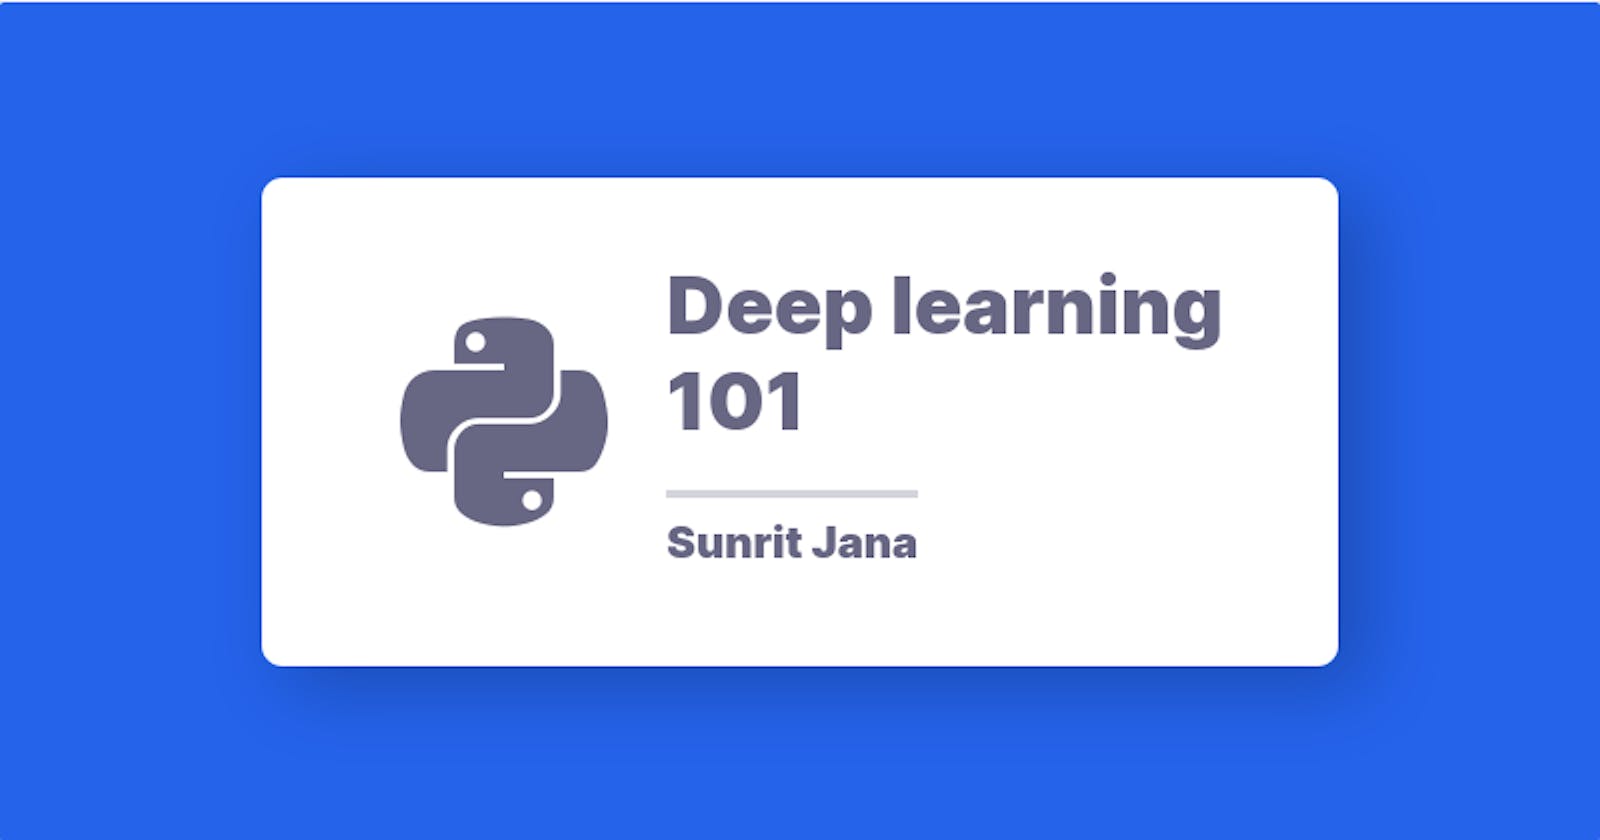 Deep learning 101